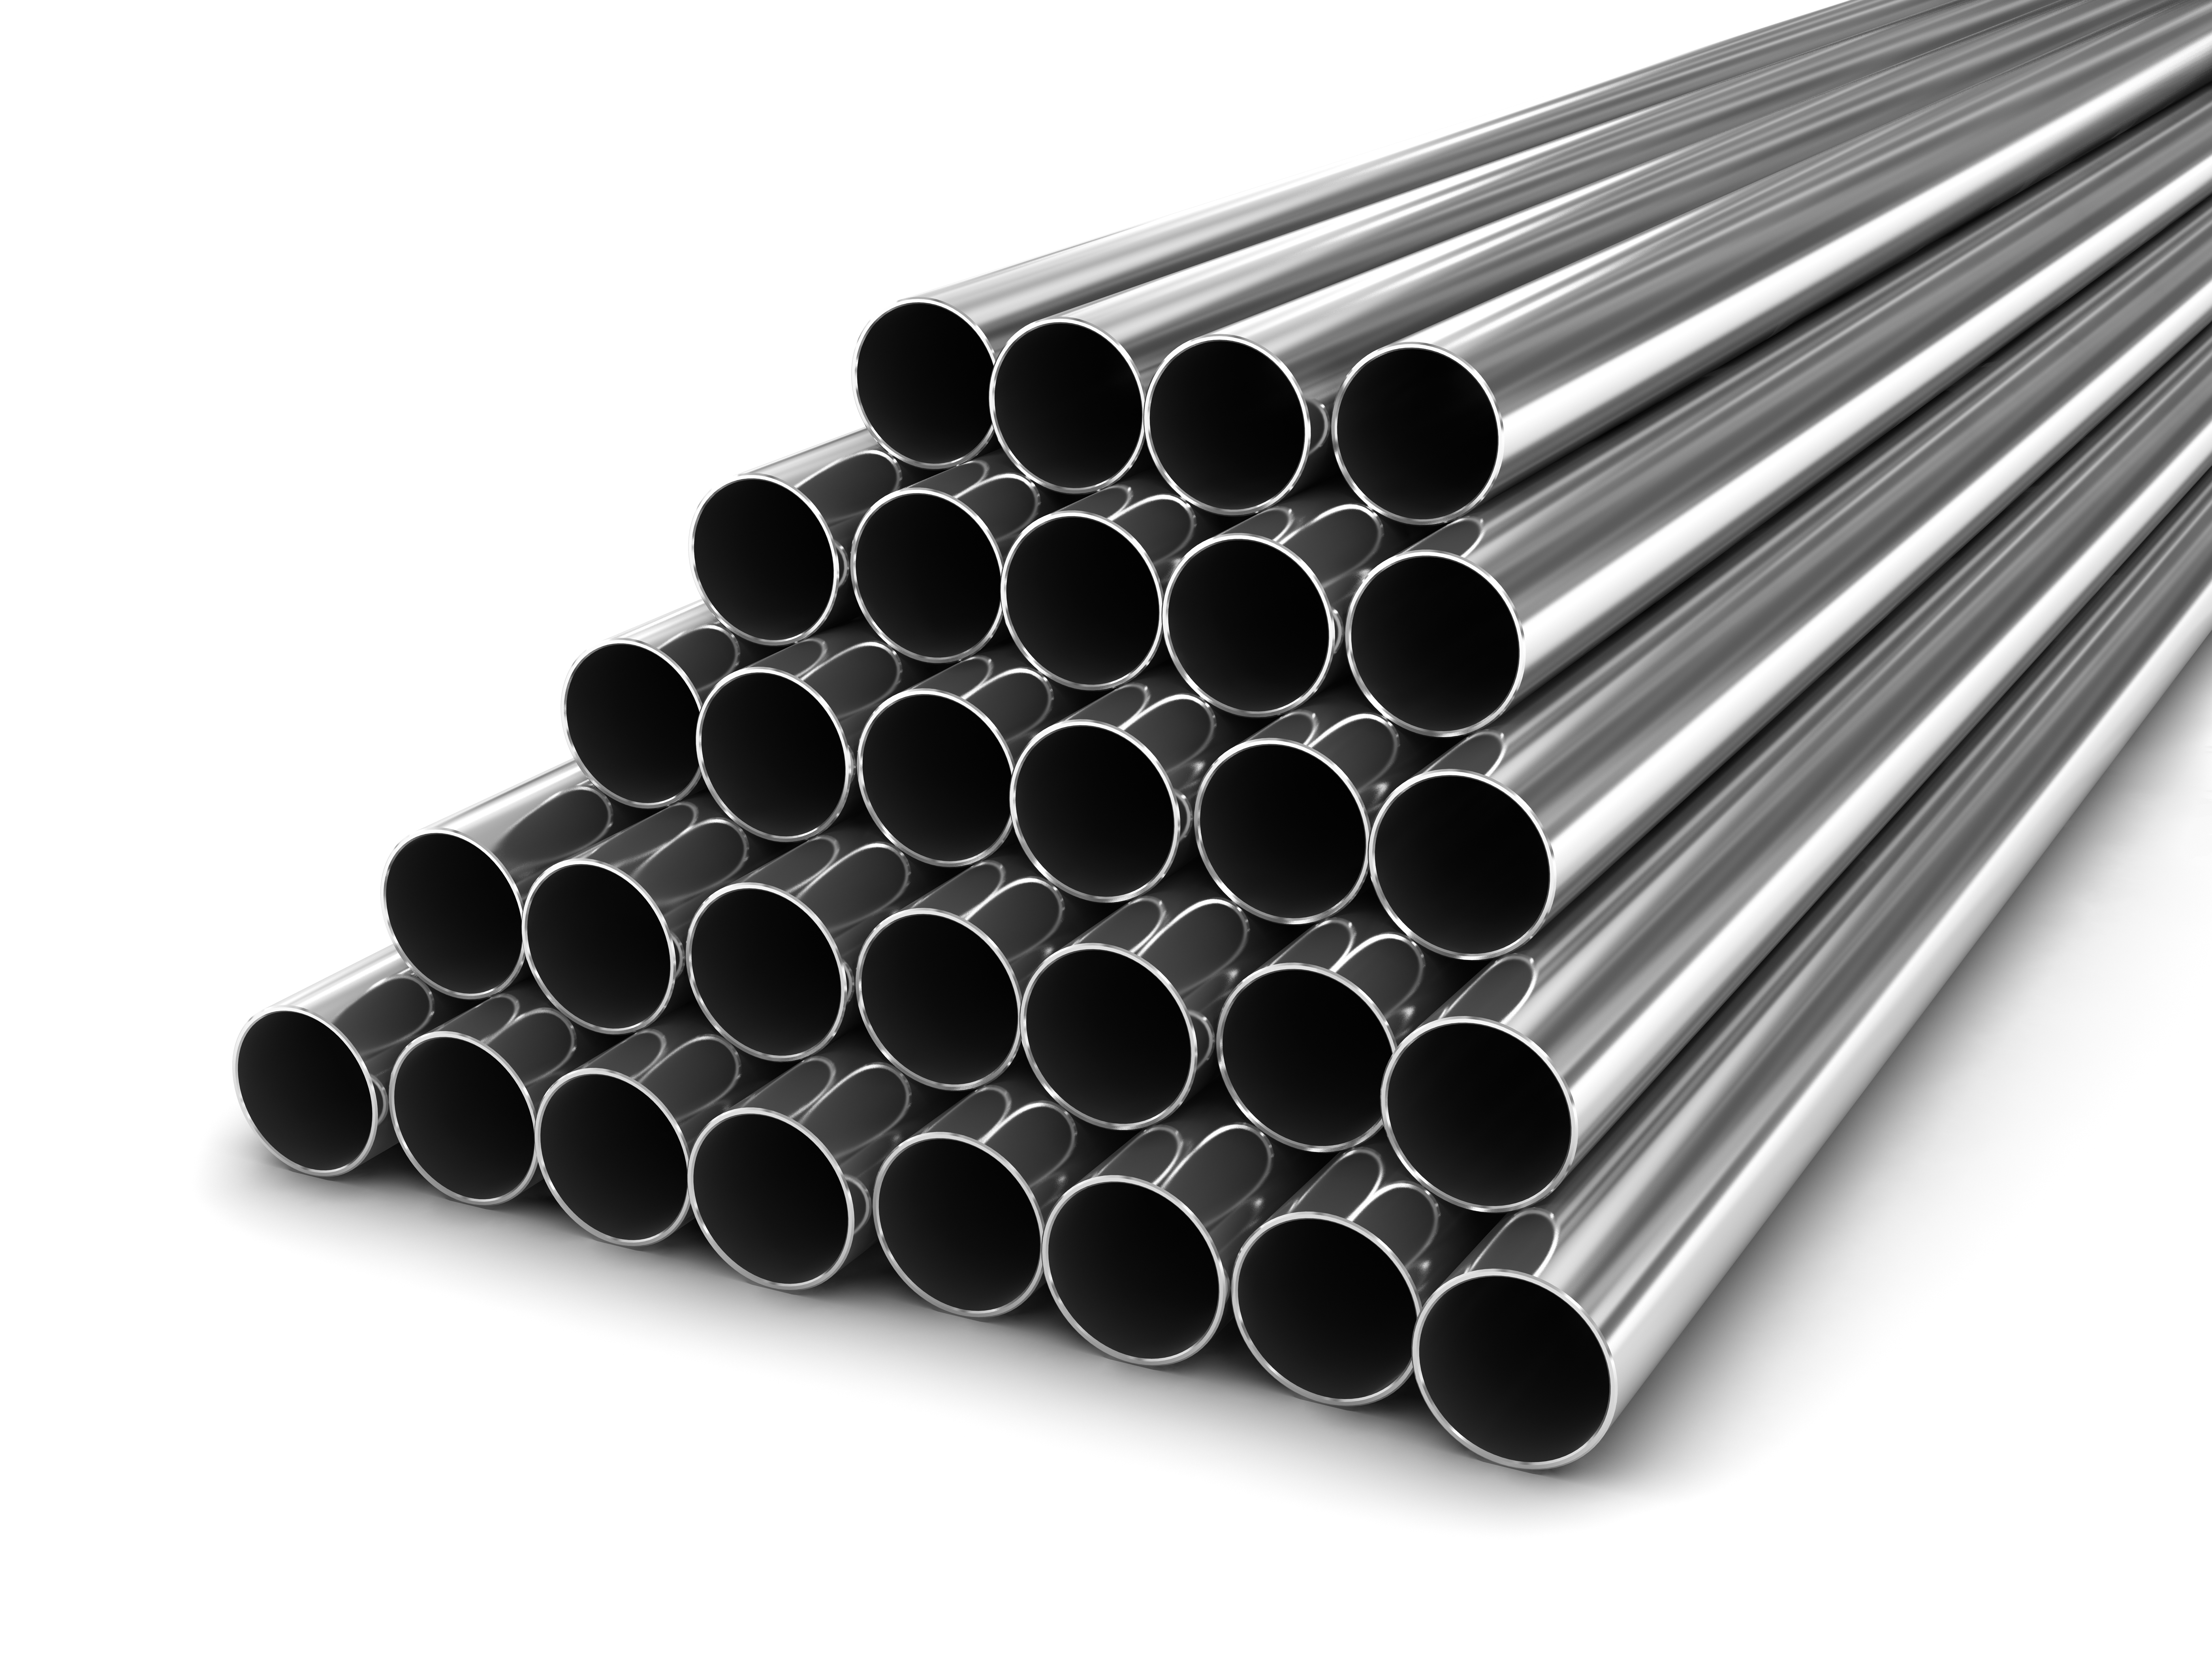 Steel tubes